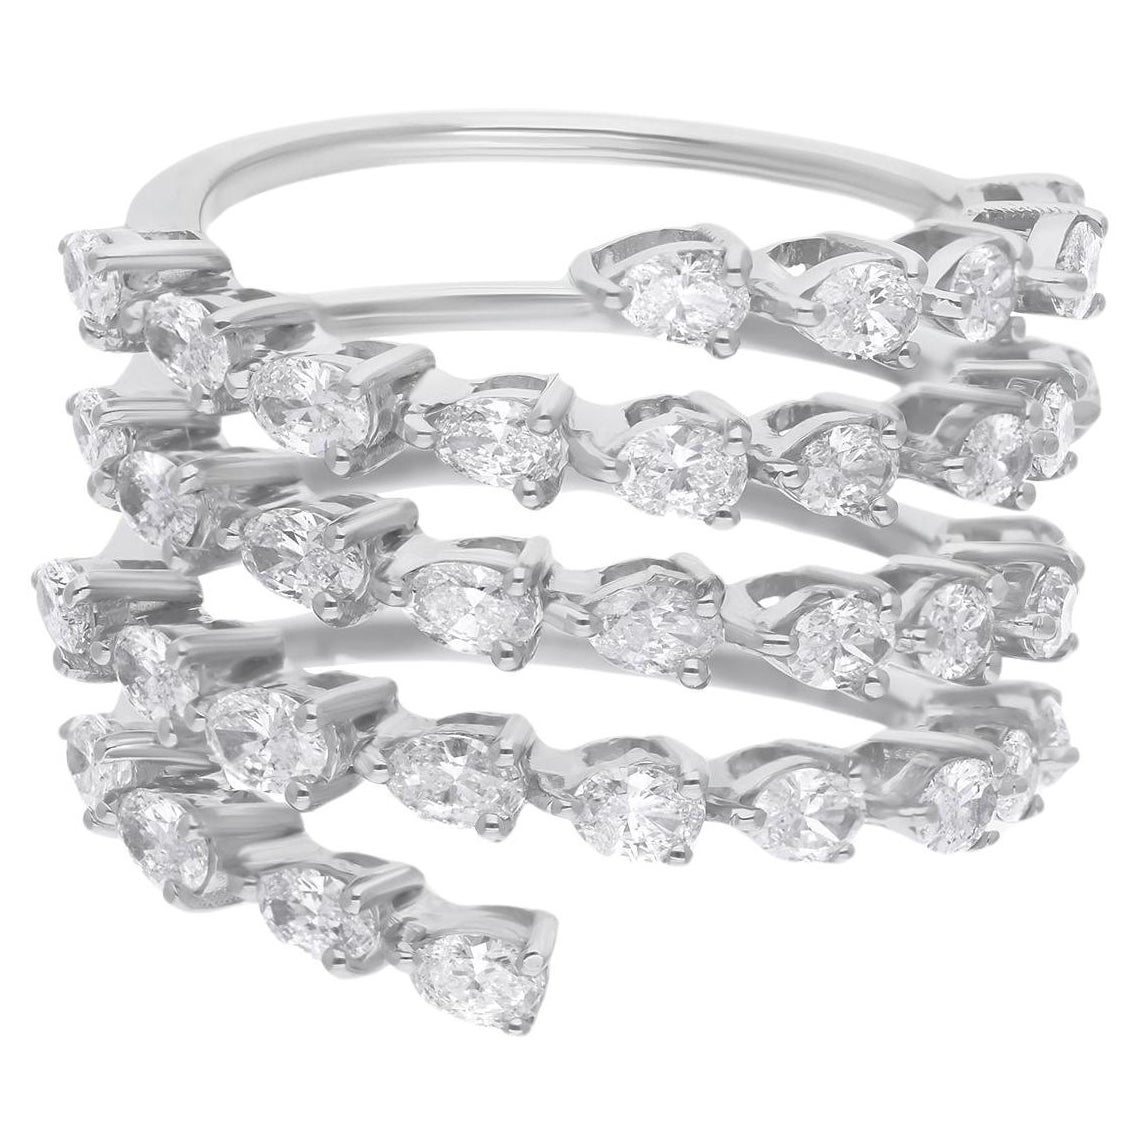 2.08 Carat Oval Shape Diamond Spiral Ring 14 Karat White Gold Handmade Jewelry For Sale